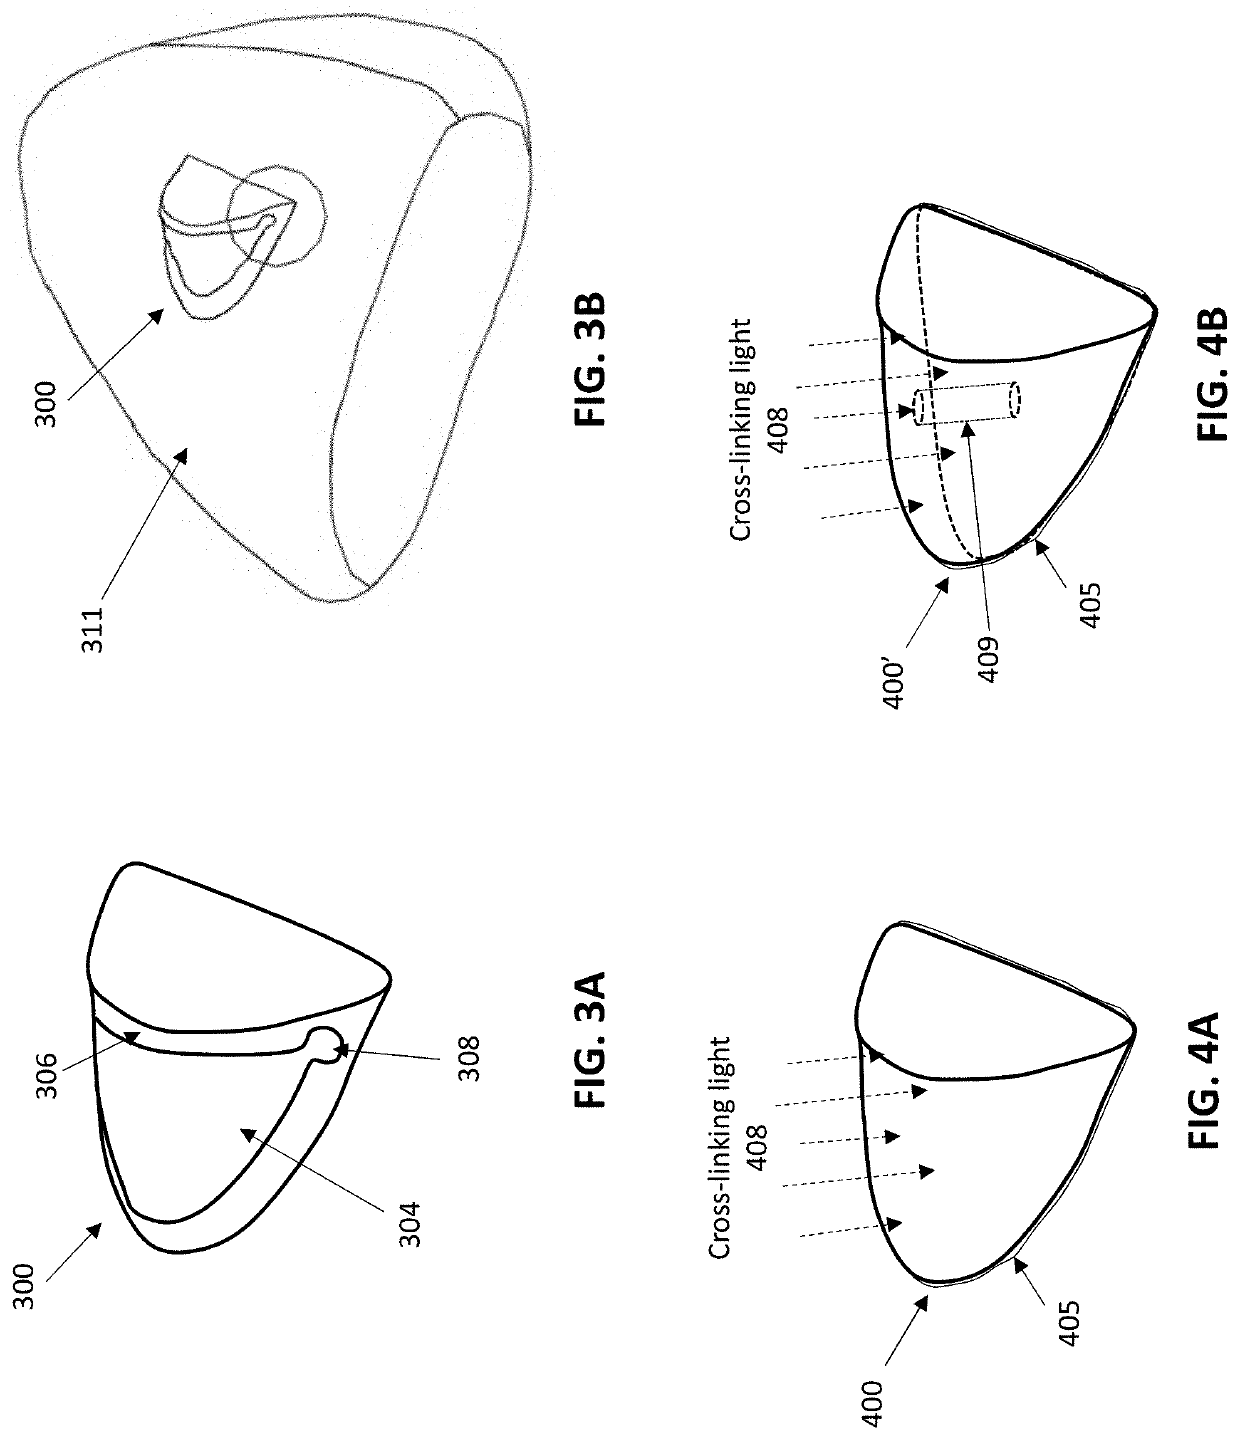 Dental attachment placement structure